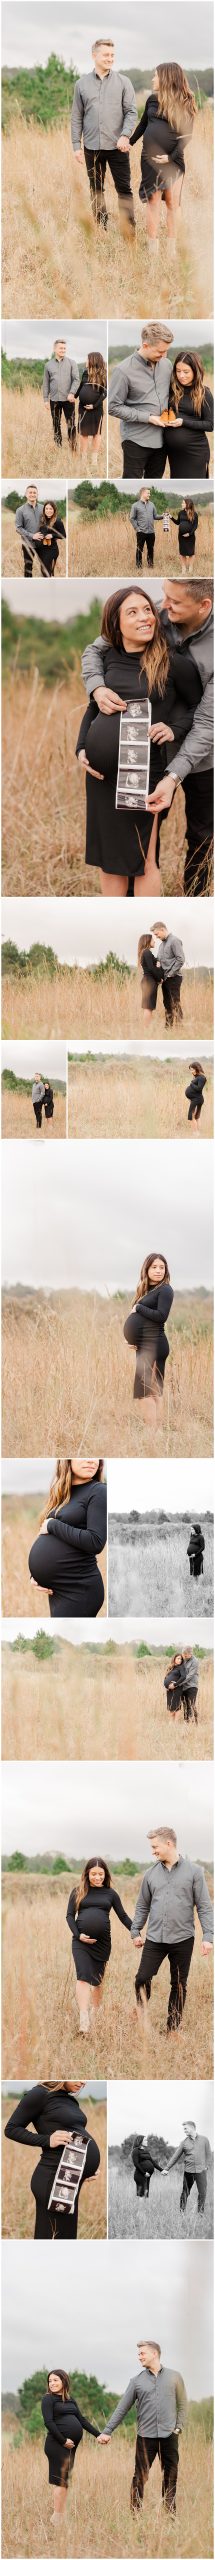 maternity photography session fairhope alabama jennie tewell 0001 1